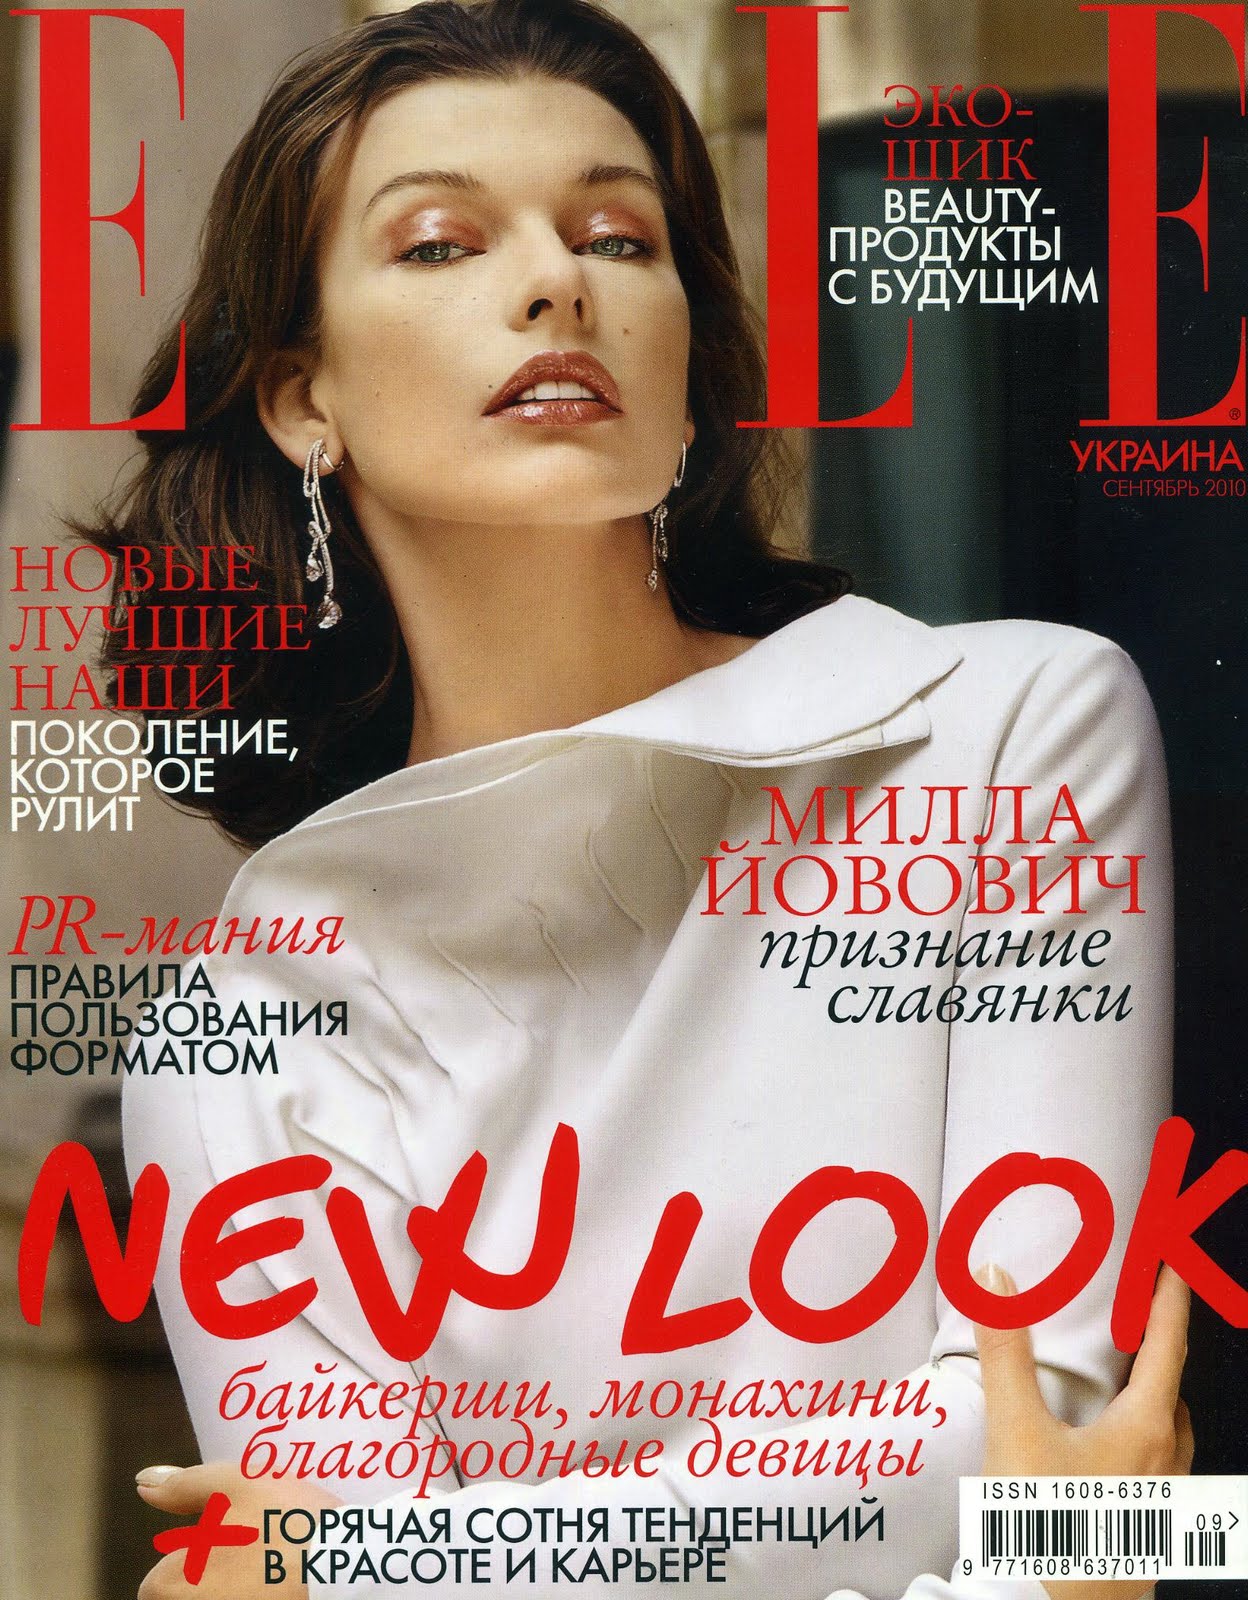 http://3.bp.blogspot.com/_6i4VPSyuwsM/TIoPM7DDPaI/AAAAAAAAAgI/Z2XEMJMYlRc/s1600/Milla+Jovovich+in+Elle+Ukraine+Sep+2010.jpg